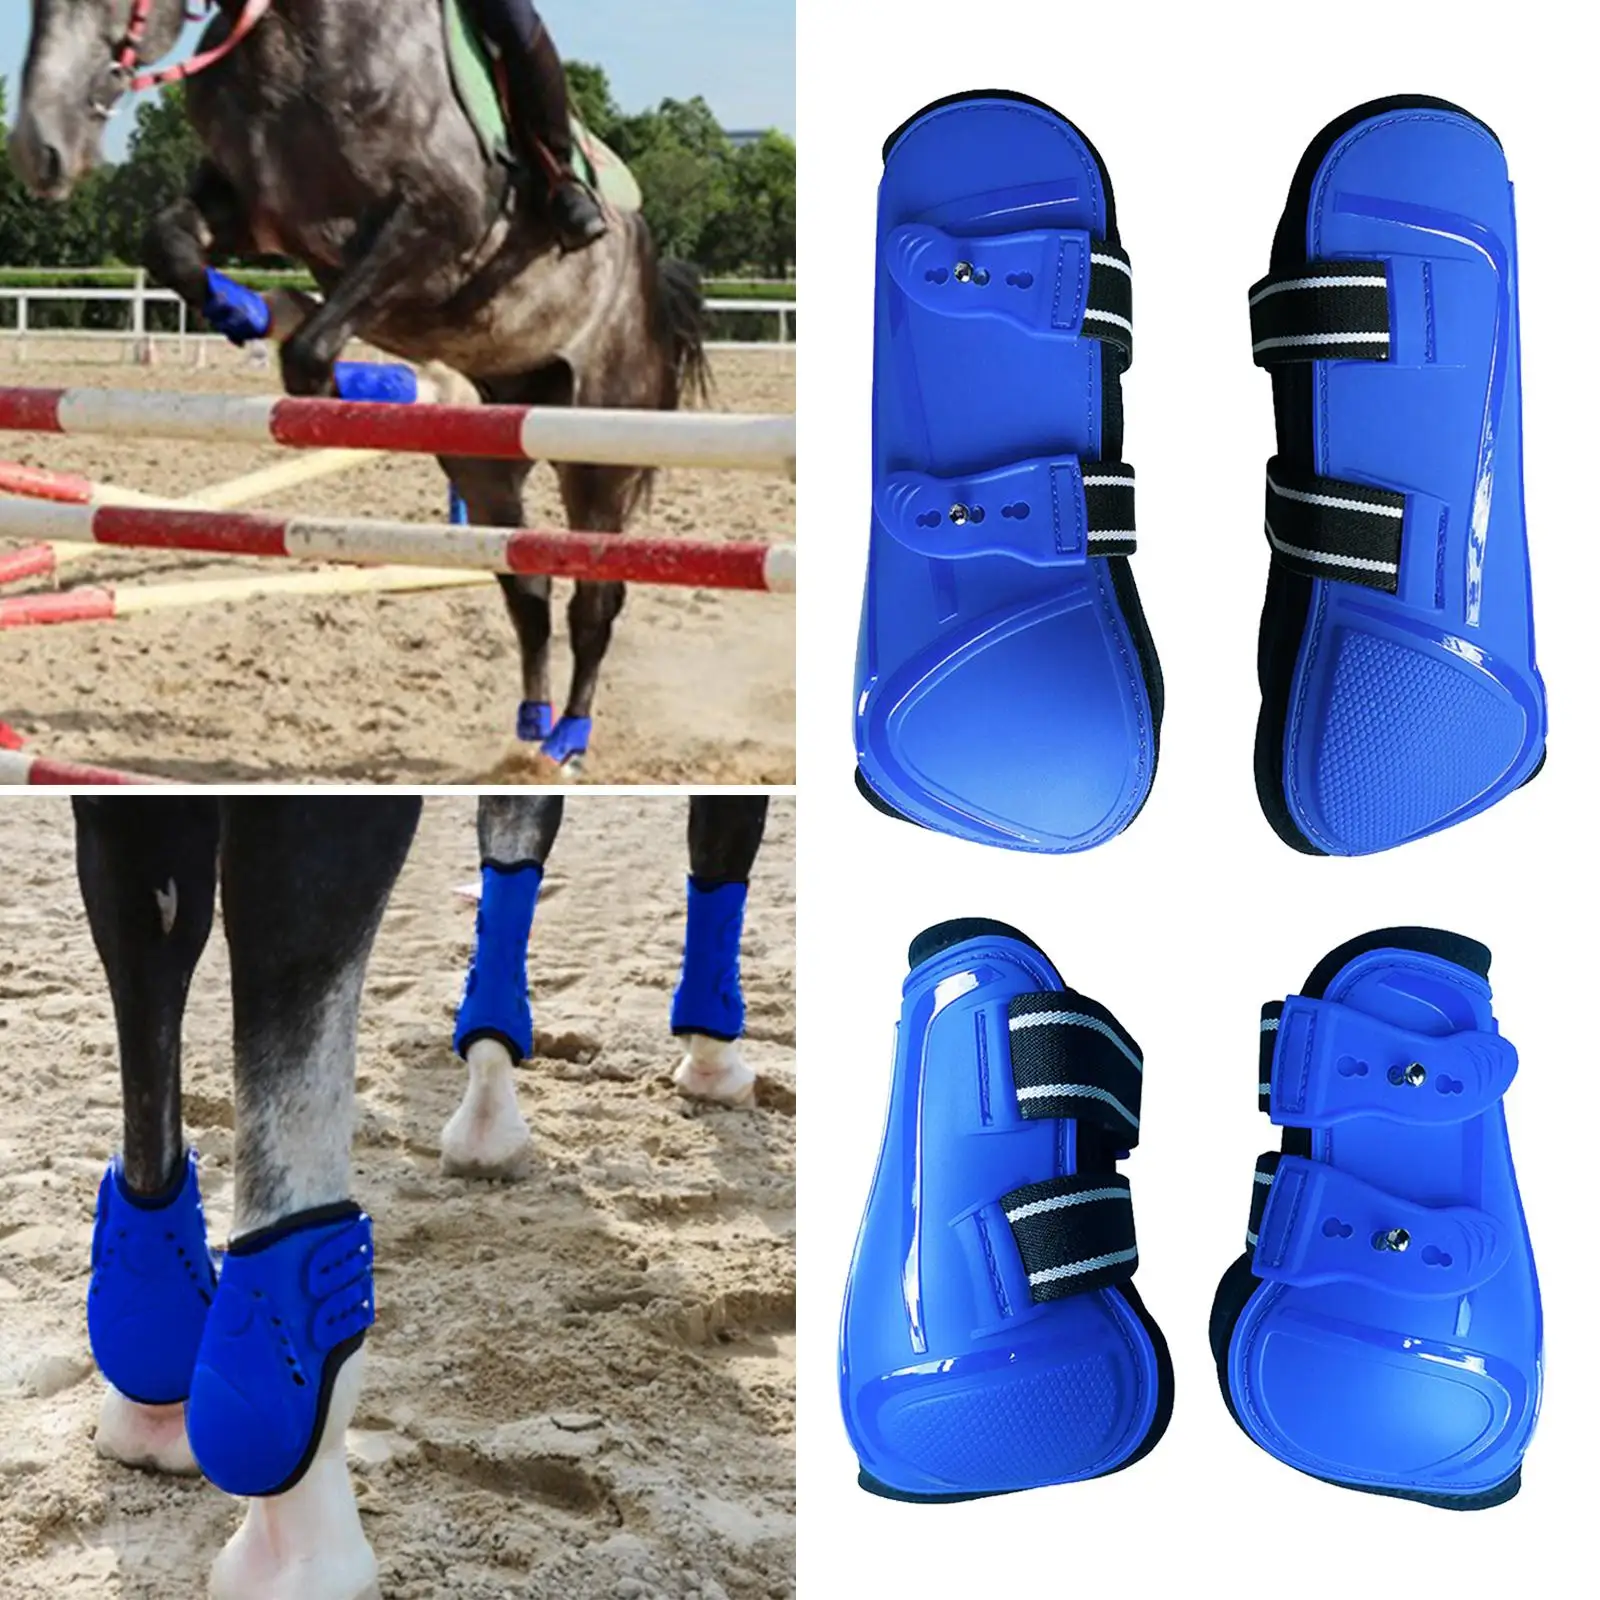 1 Adjustable Horse Leg Boots PU Wrap Riding, Horse Leg Boots Brace Guard for Horse Training Jumping Leg 